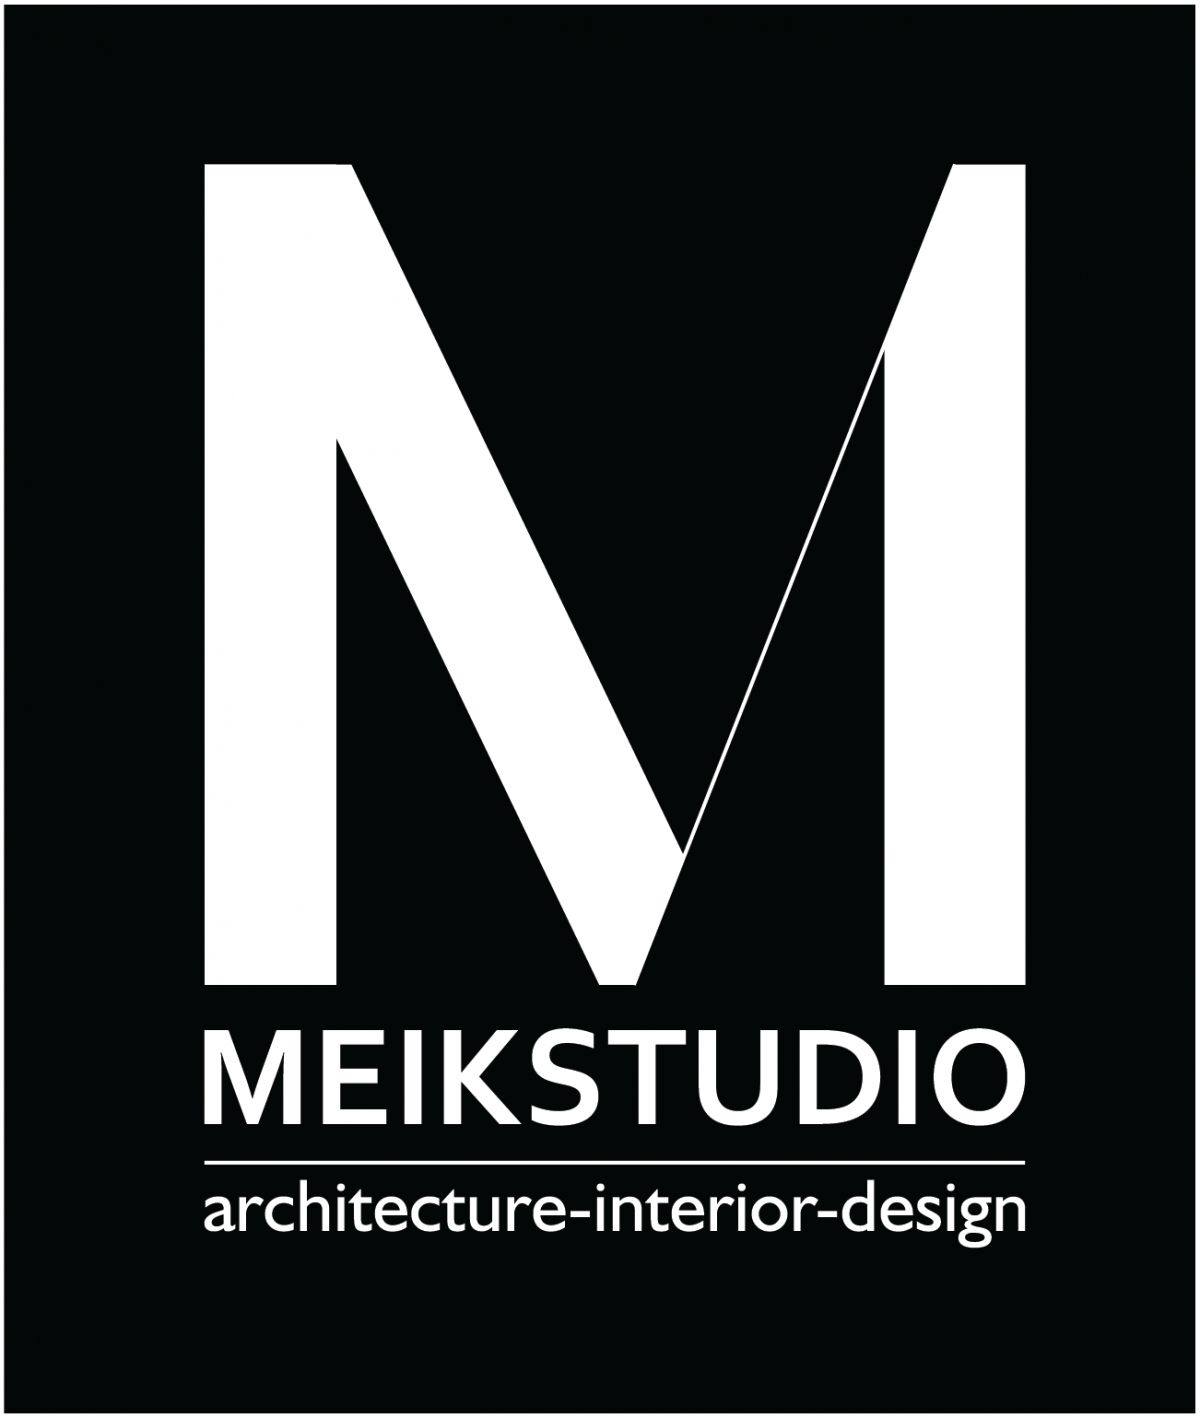 meikstudio architecture-interior-design - Viana do Castelo - Decoradores